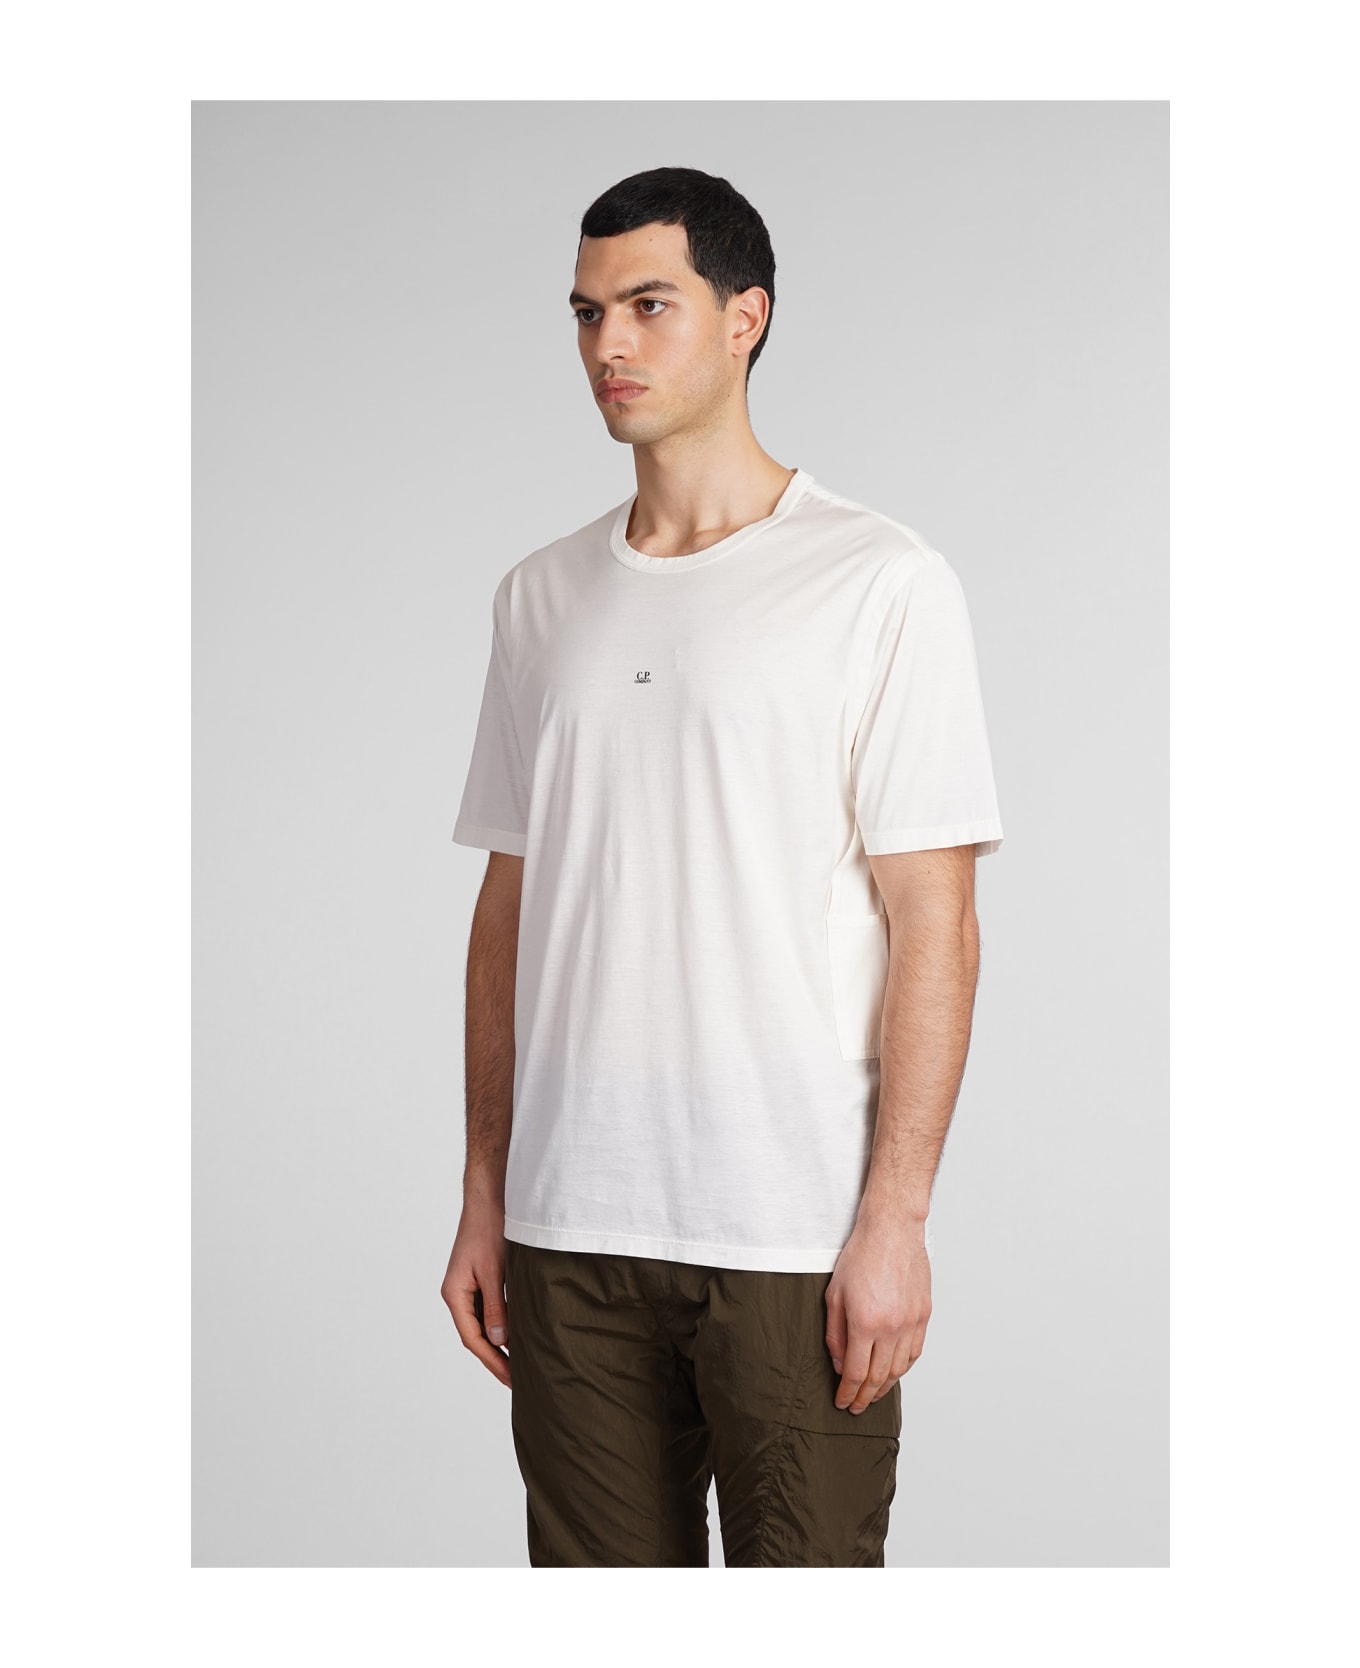 C.P. Company T-shirt In Beige Cotton - Gauze white